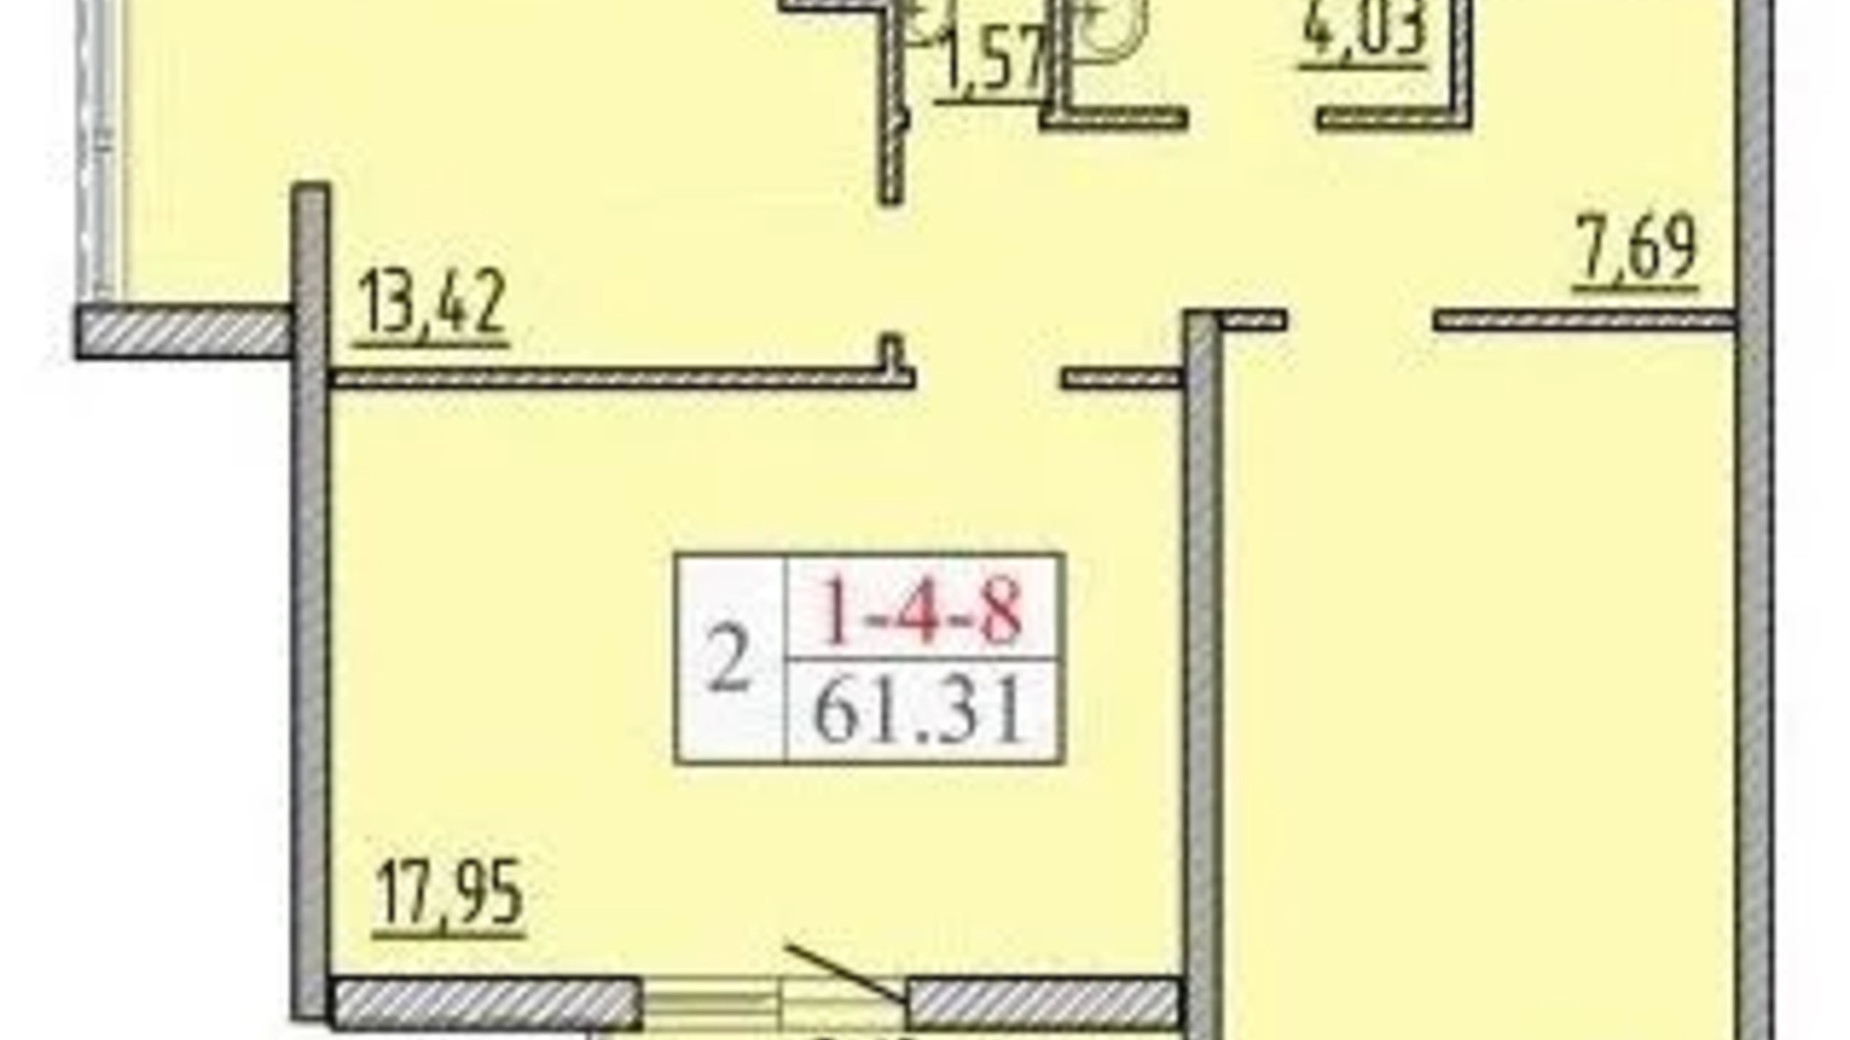 Планування 2-кімнатної квартири в ЖК П'ятдесят восьма перлина 61.31 м², фото 606617